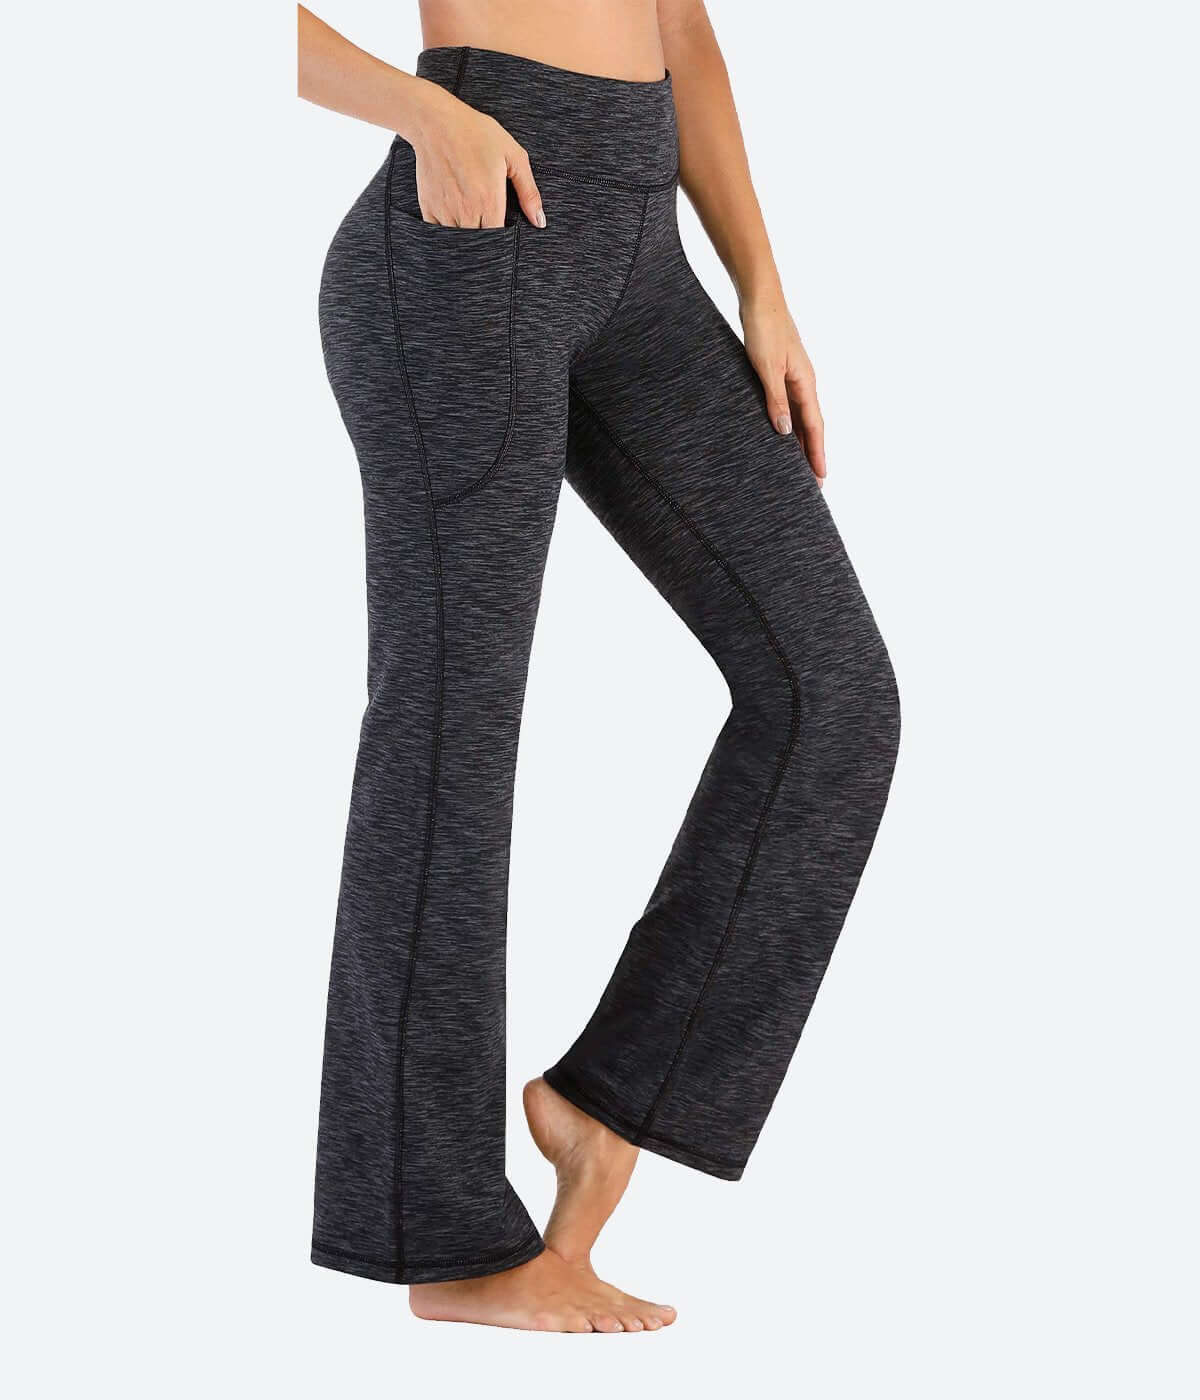 QWANG Women's Yoga Pants Bootcut Yoga Pants with Pockets for Women